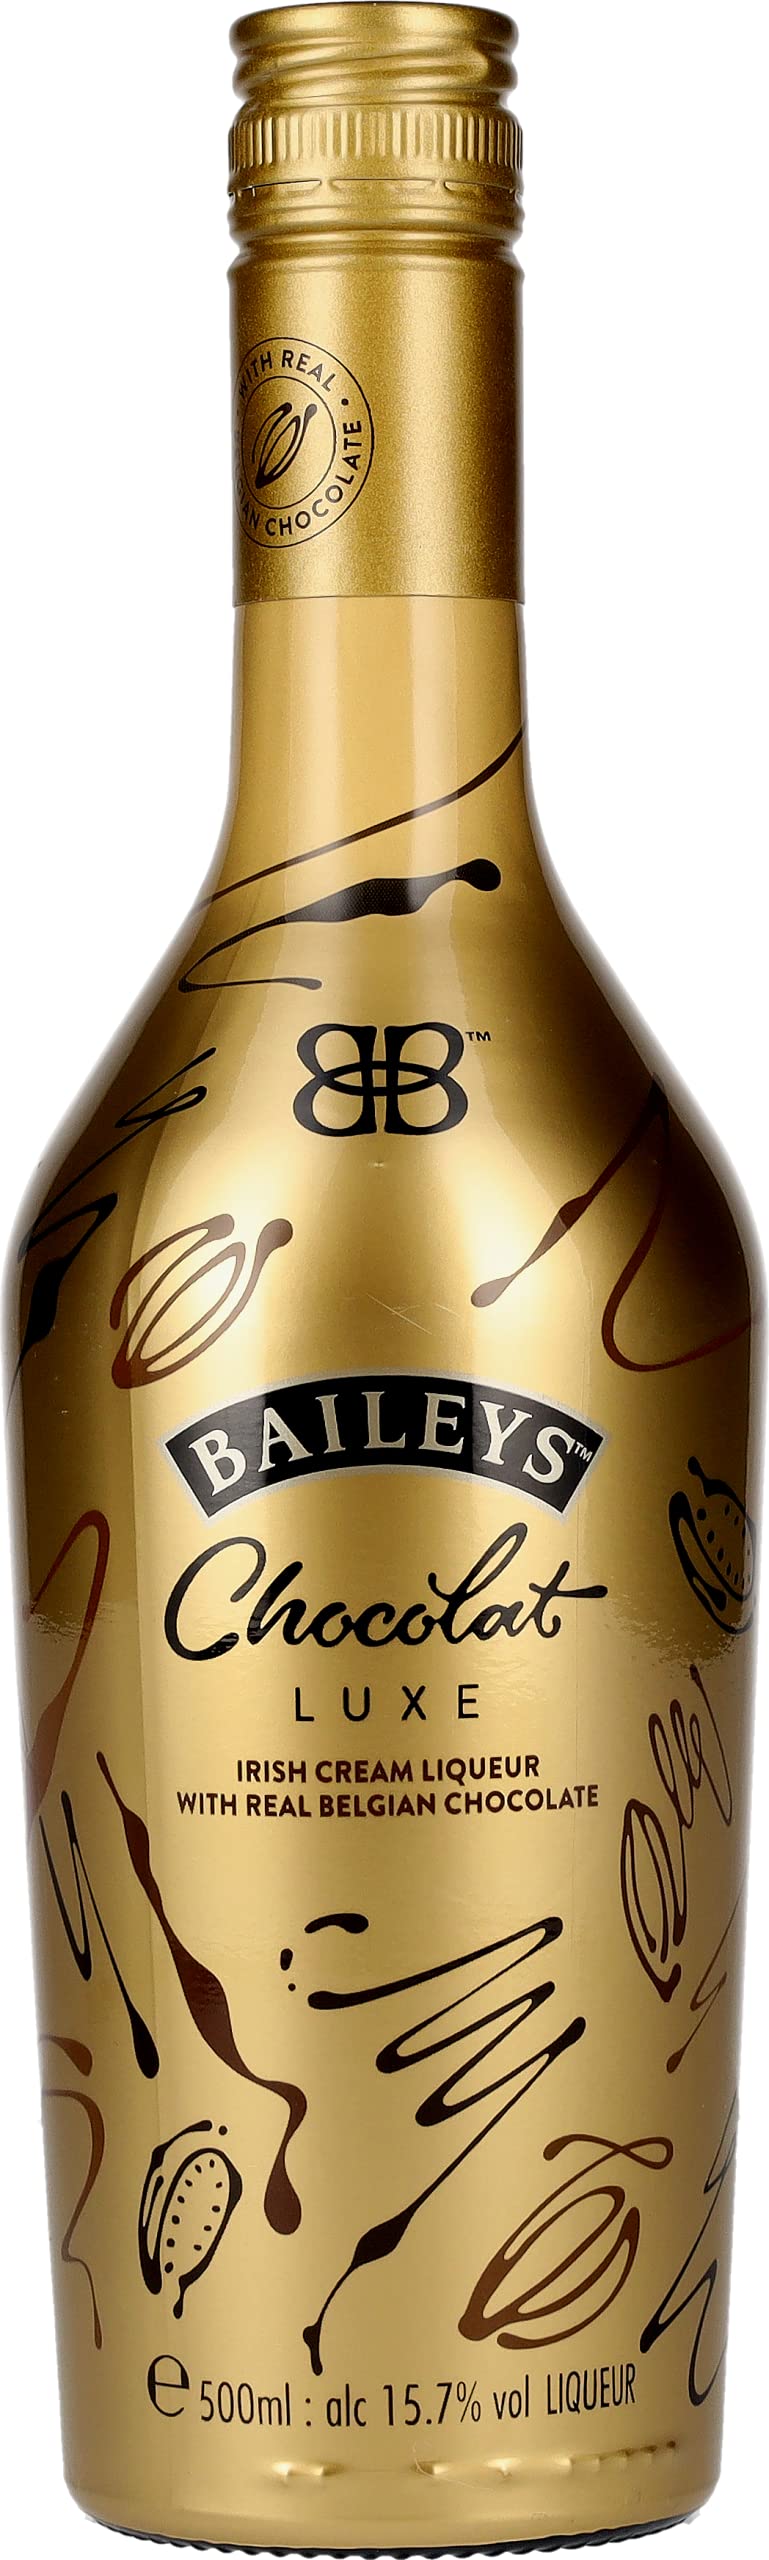 Baileys Chocolate Irish Cream Liqueur 750ml